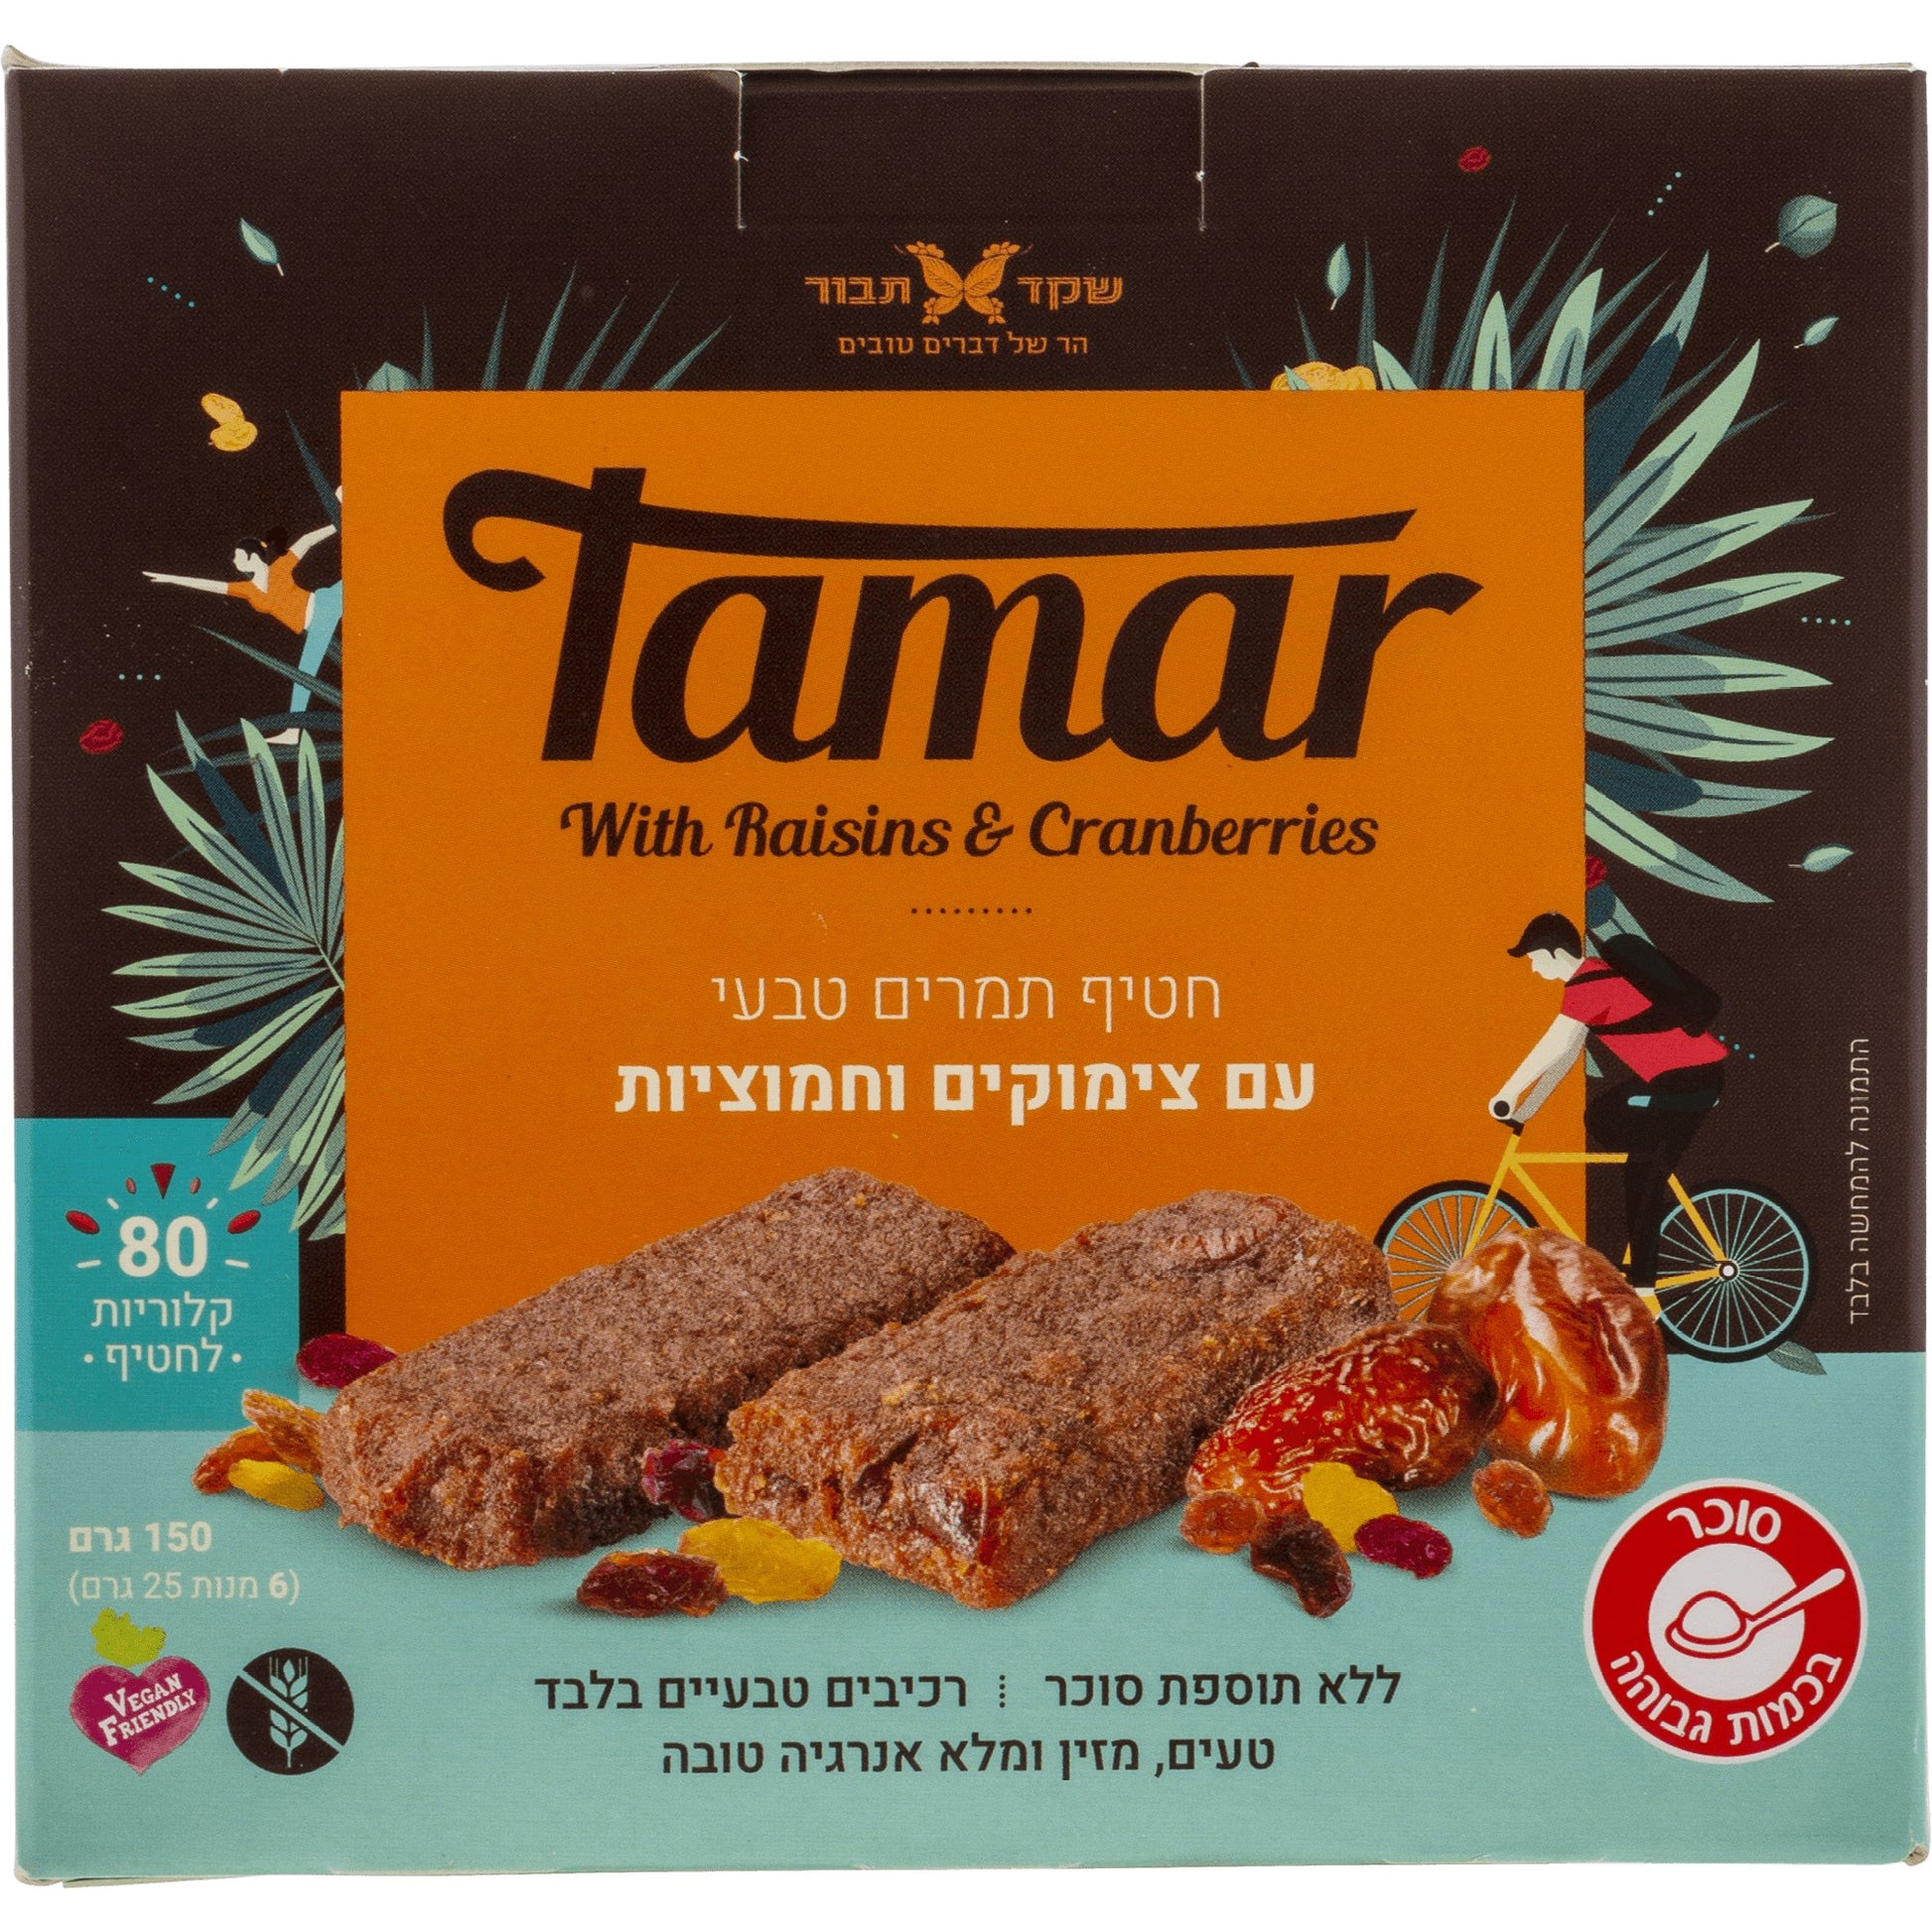 Tamar Dates with Raisins & Cranberries 150 gr - Shaked Tavor - Israel Menu